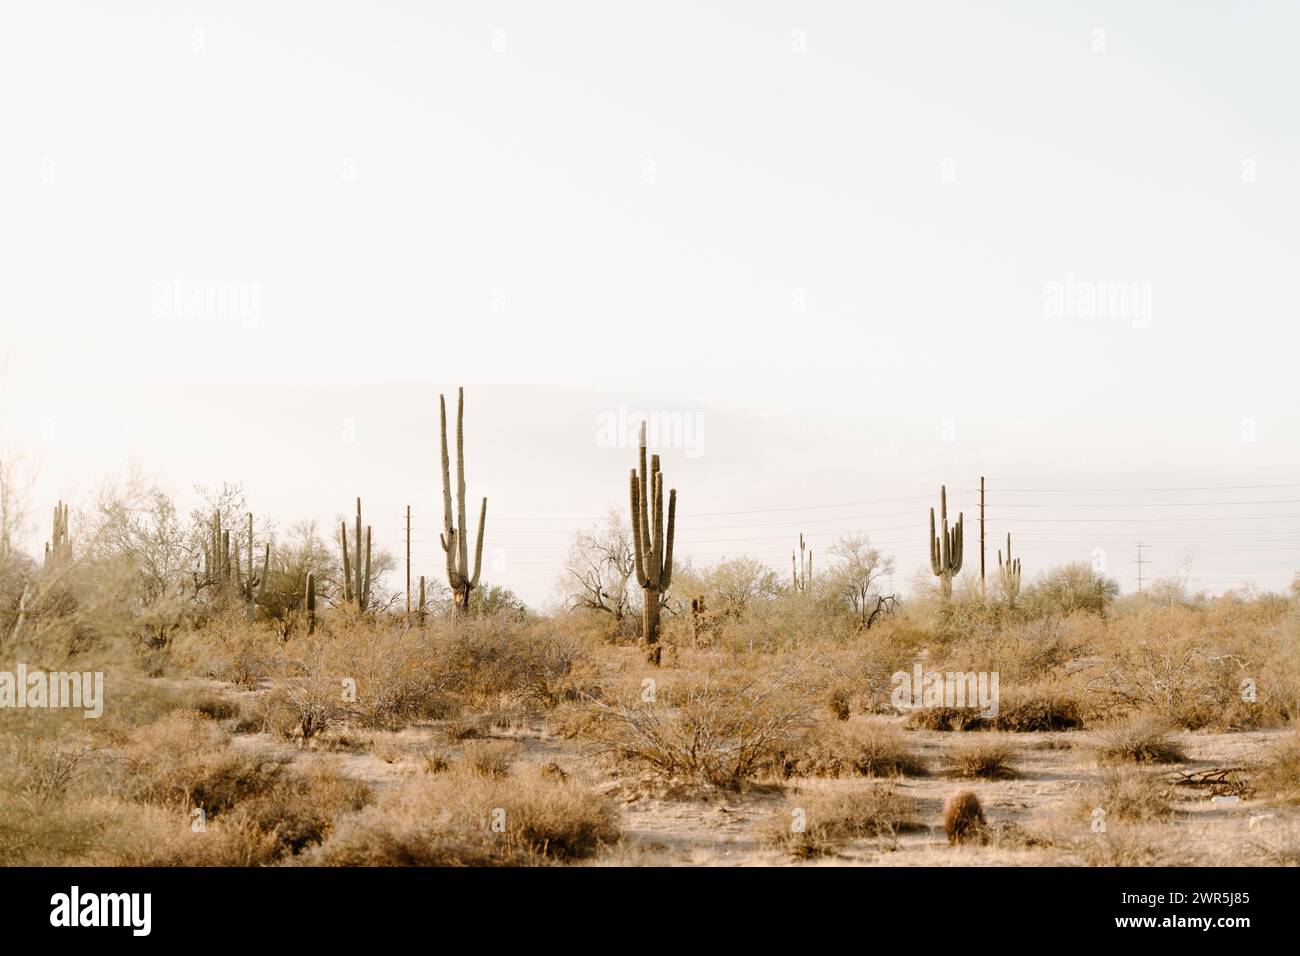 Saguaro cactus in Phoenix Arizona desert Stock Photo